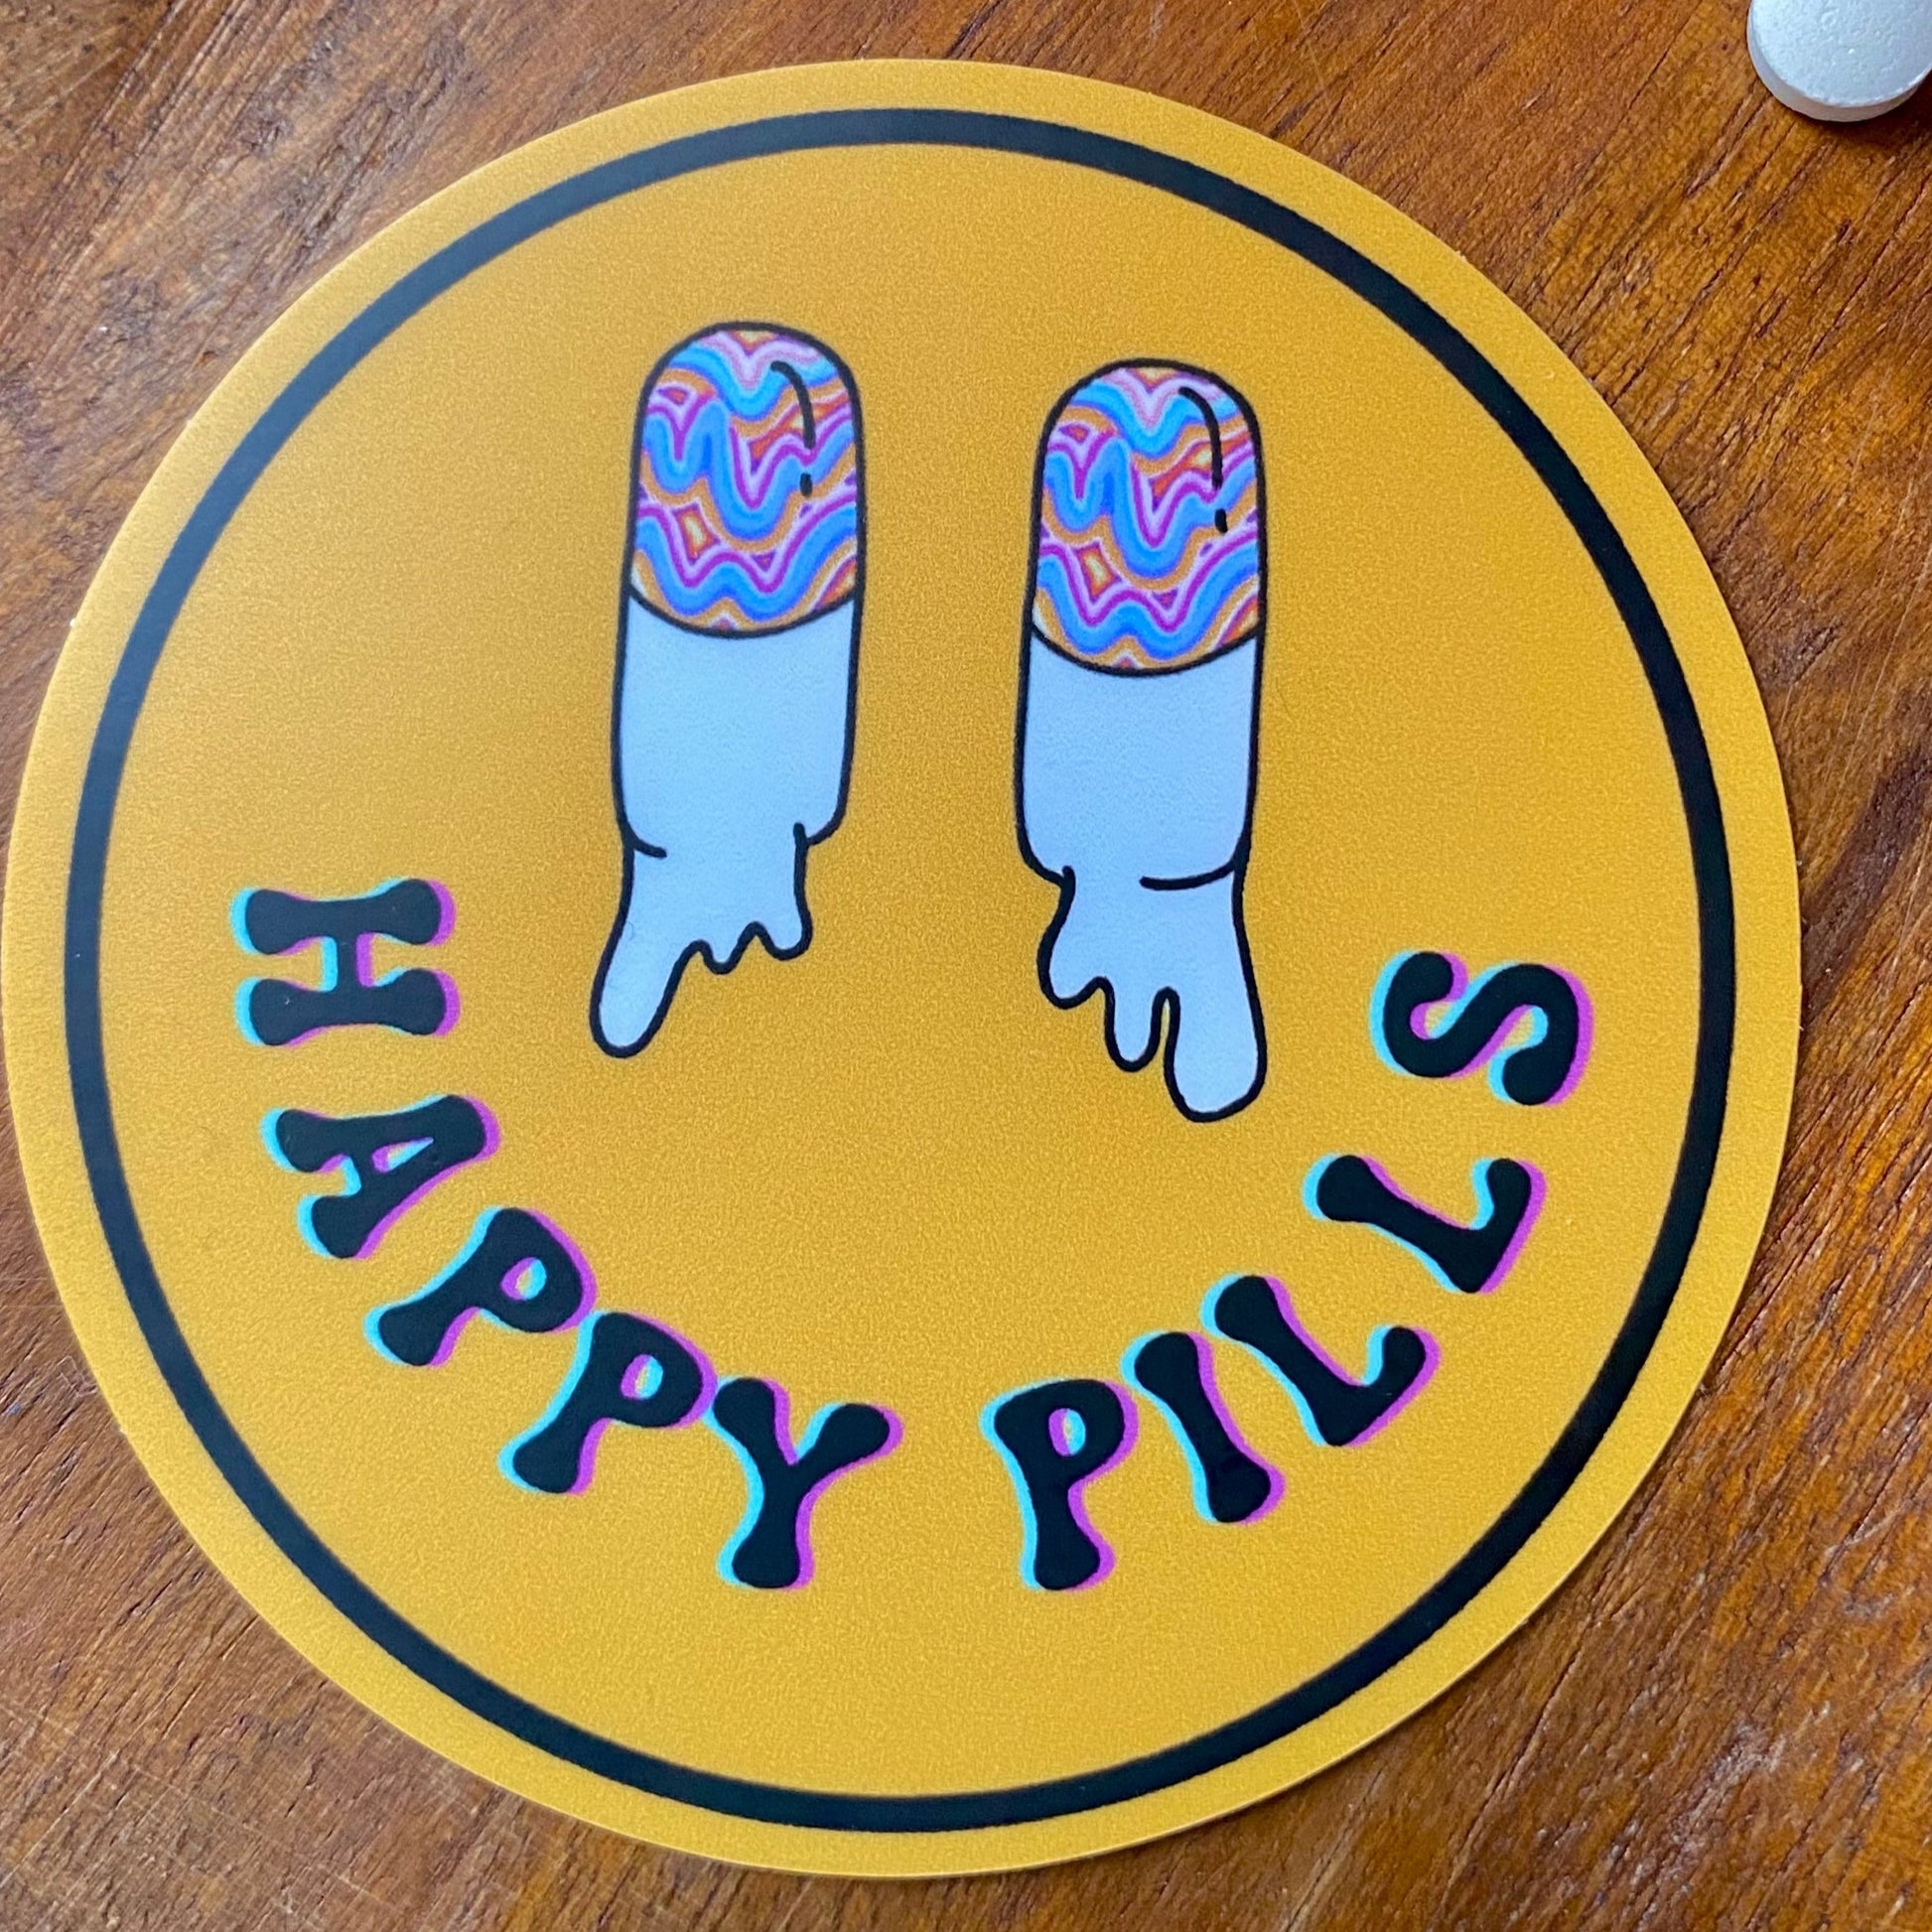 Buy Trippy Smiley Face - Die cut stickers - StickerApp